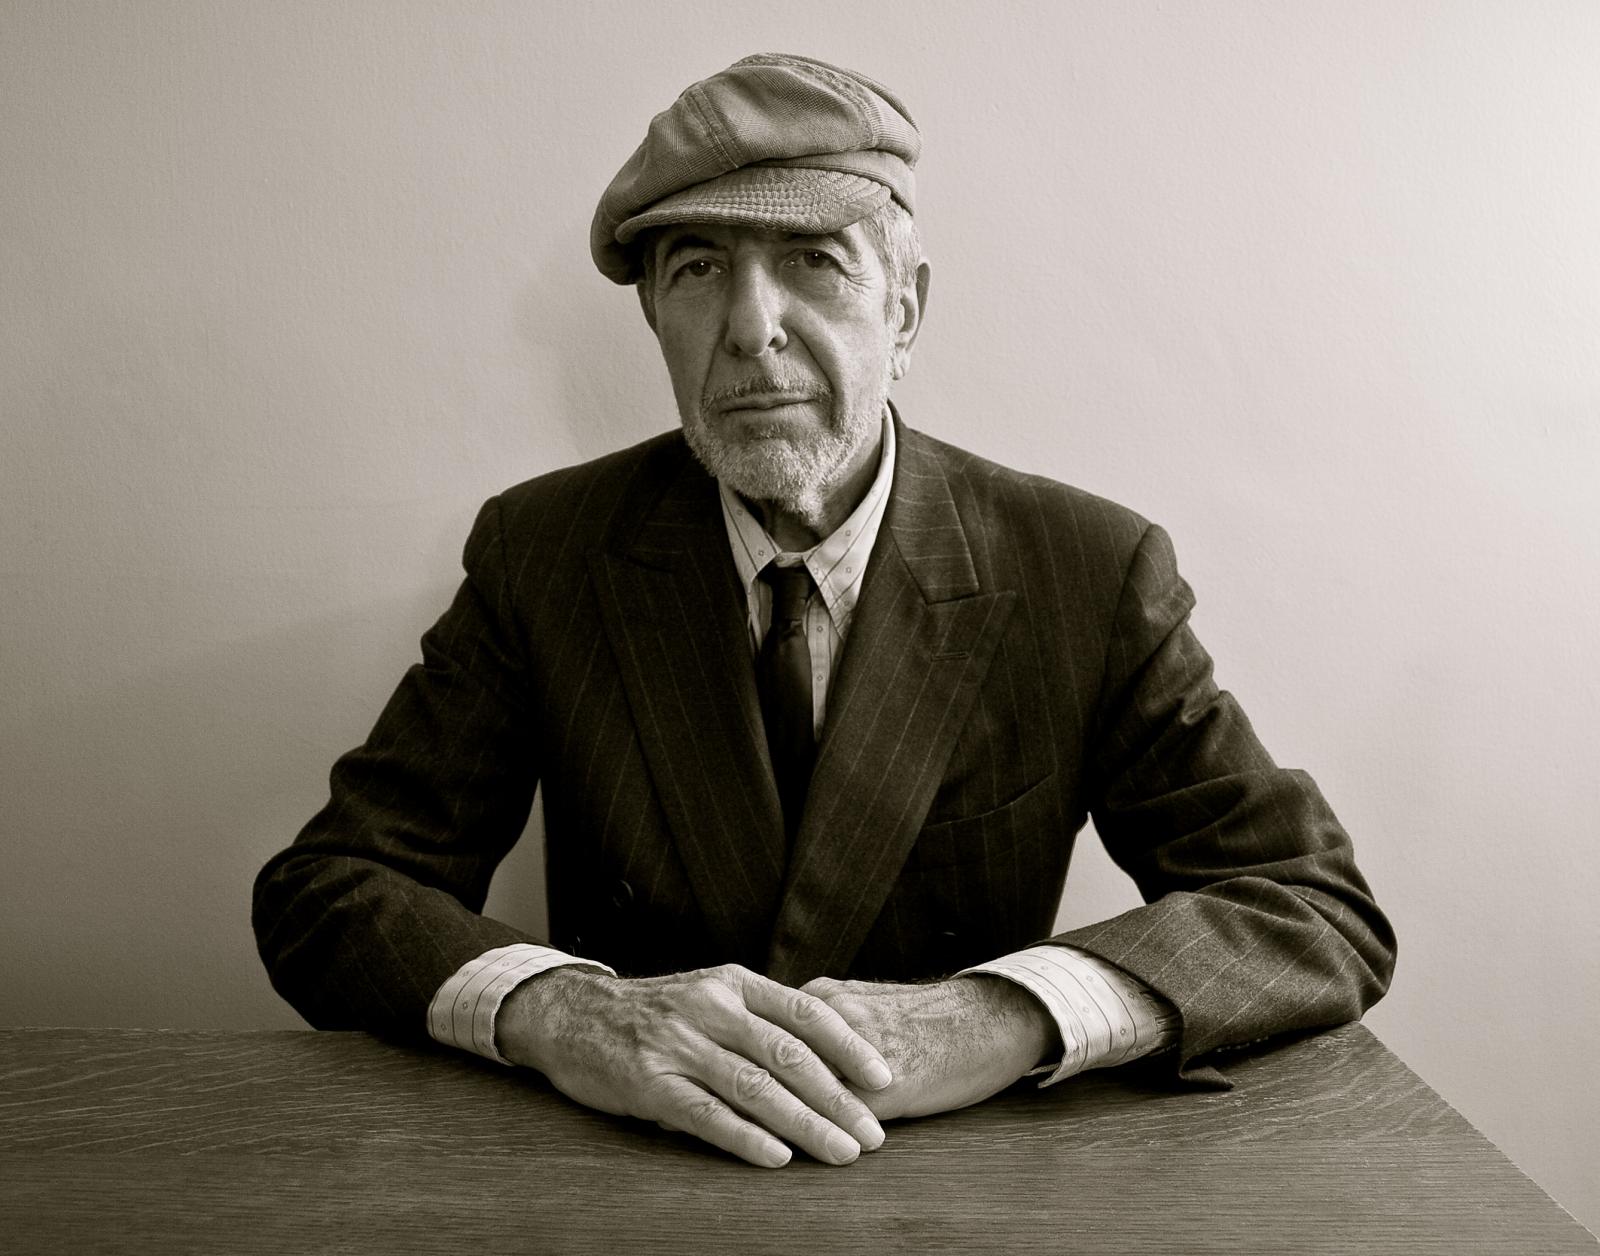 Leonard Cohen: The Mourner’s Kaddish